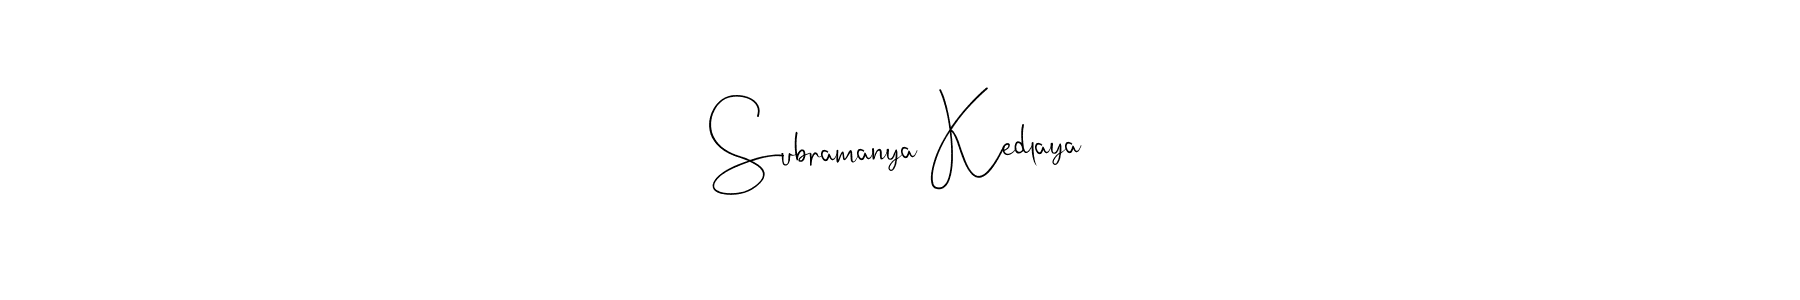 How to make Subramanya Kedlaya signature? Andilay-7BmLP is a professional autograph style. Create handwritten signature for Subramanya Kedlaya name. Subramanya Kedlaya signature style 4 images and pictures png